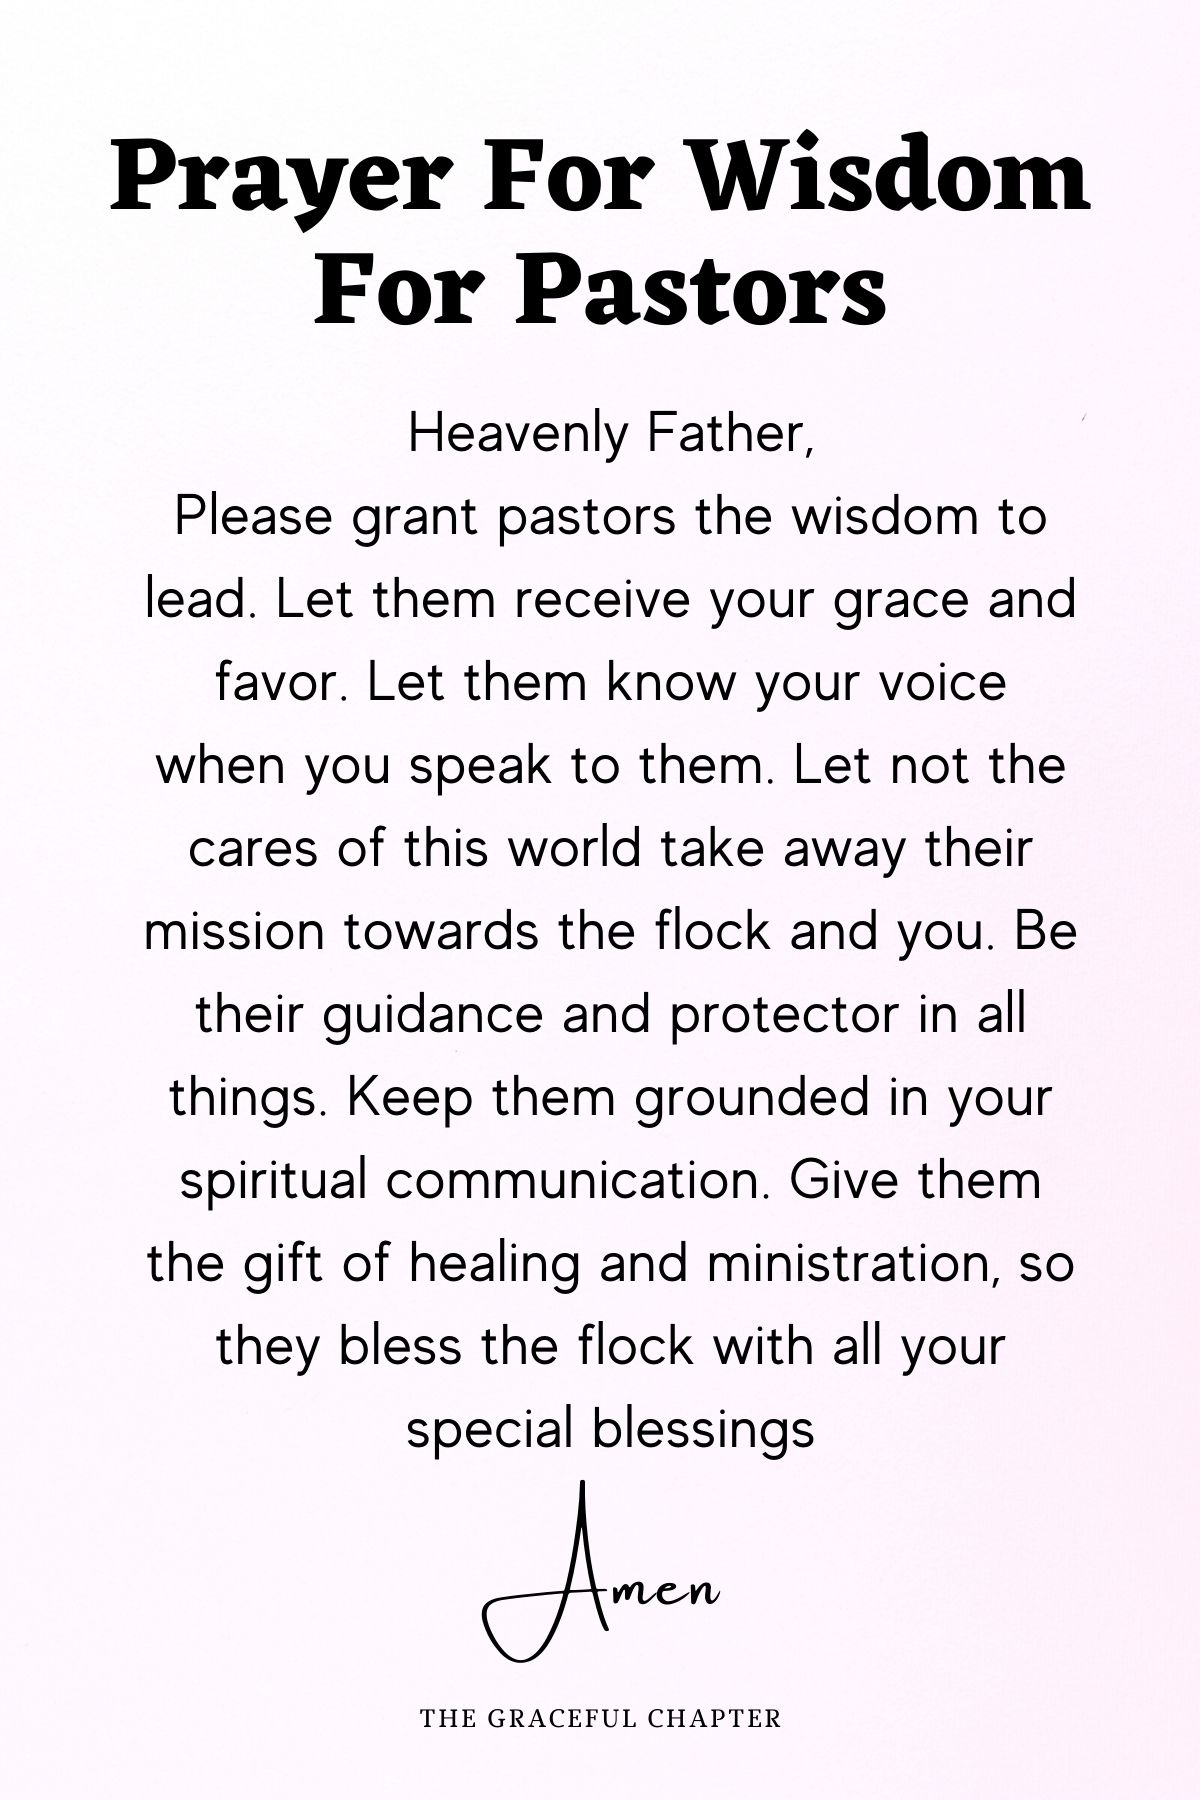 Prayer for wisdom for pastors - prayers for the church